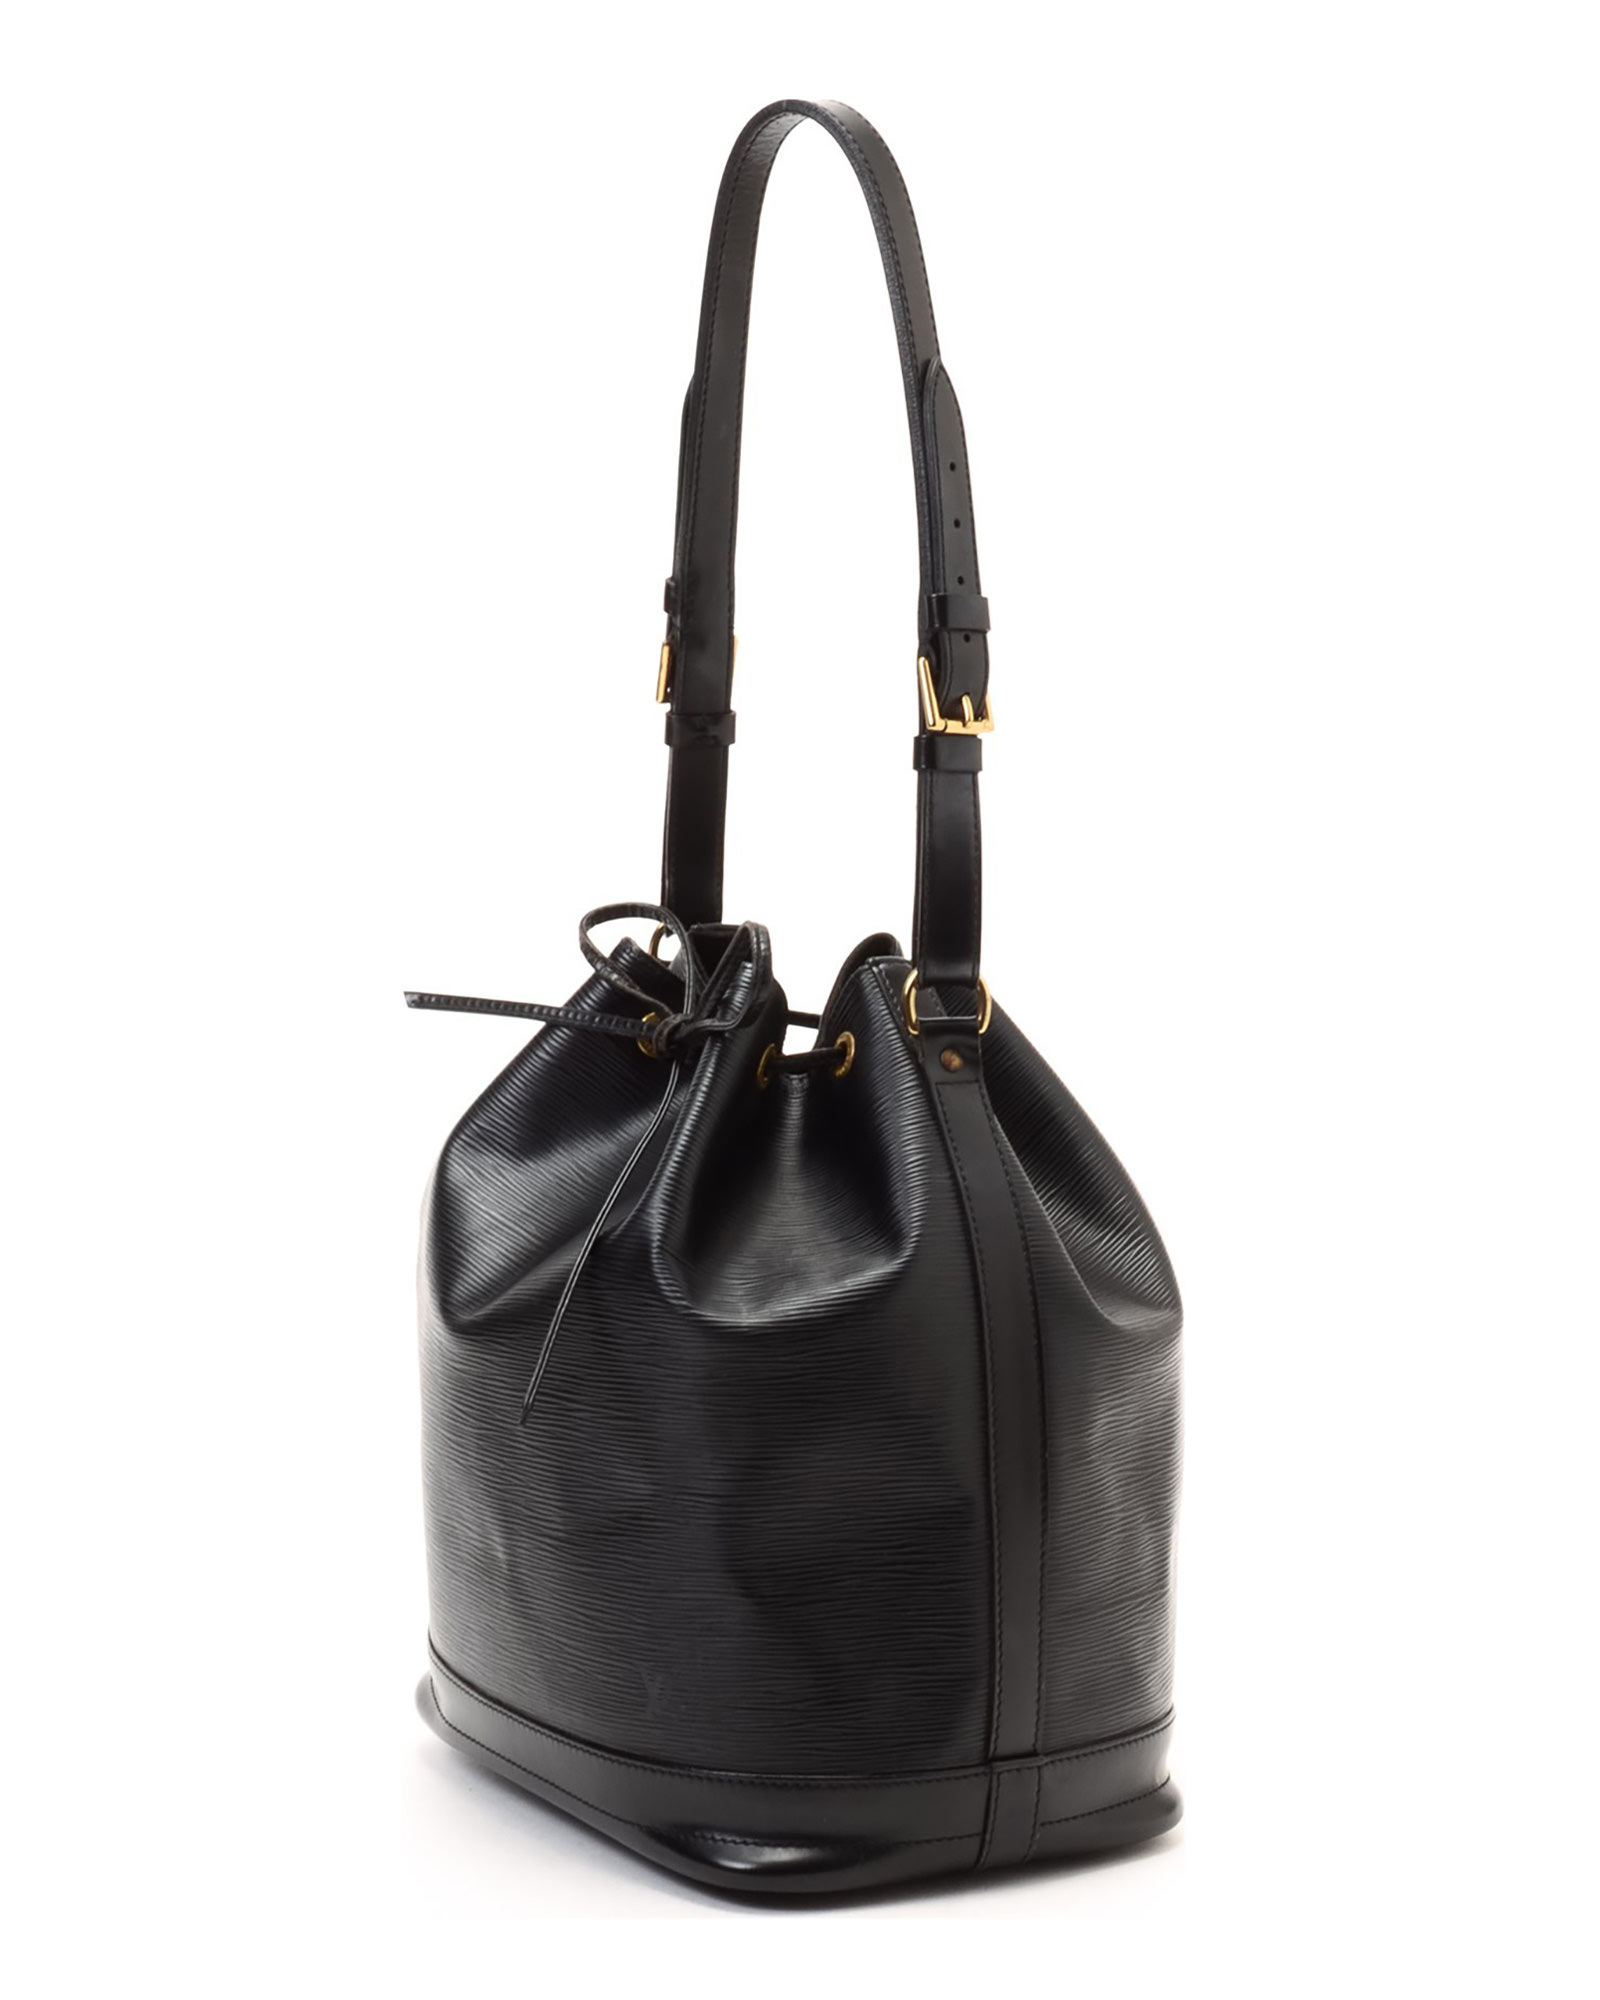 Lyst - Louis vuitton Shoulder Bag - Vintage in Black